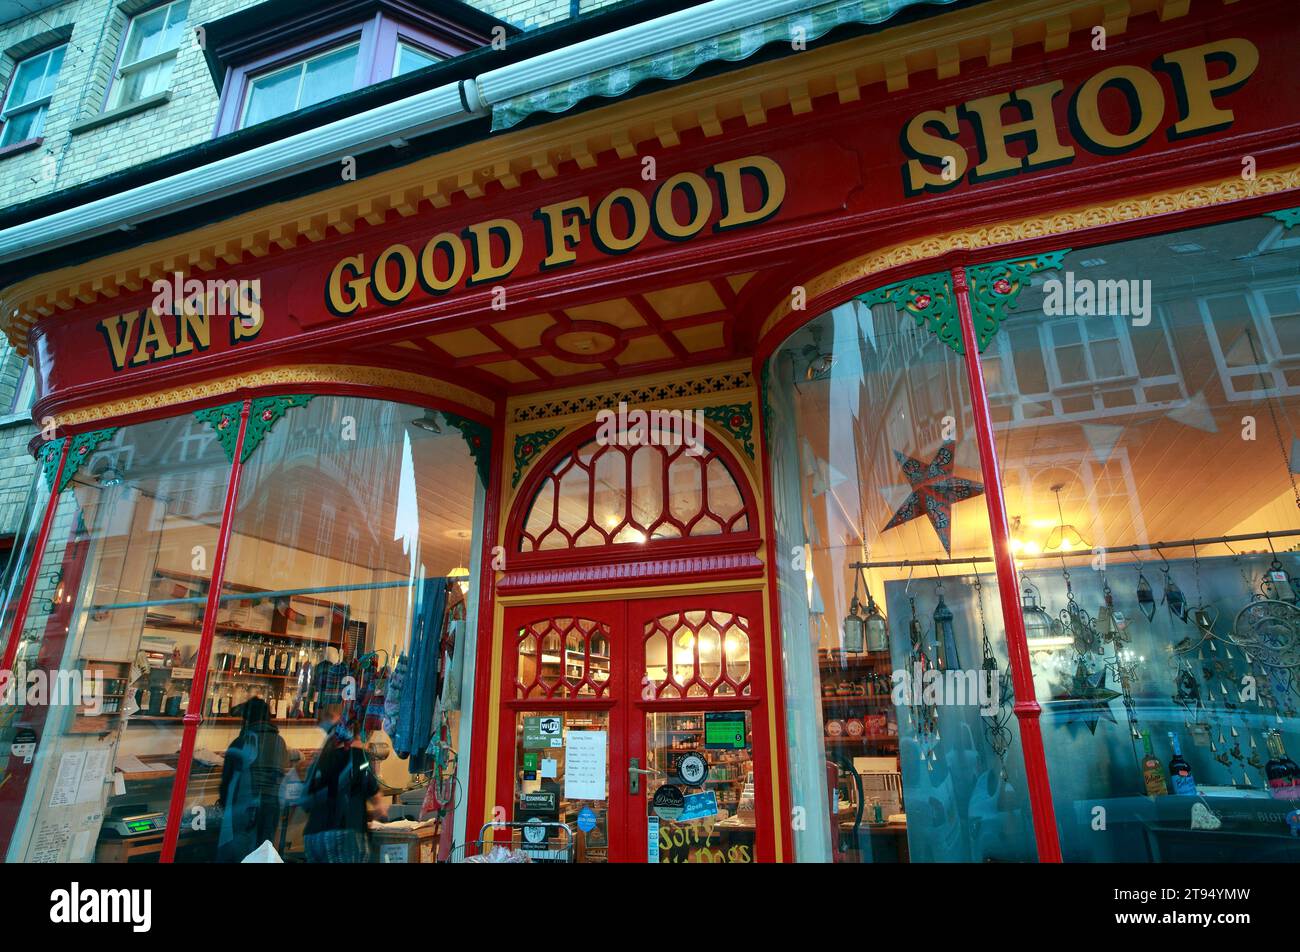 Van's Good Food Shop, Middleton Street, Llandrindod Wells, Wales. Stockfoto